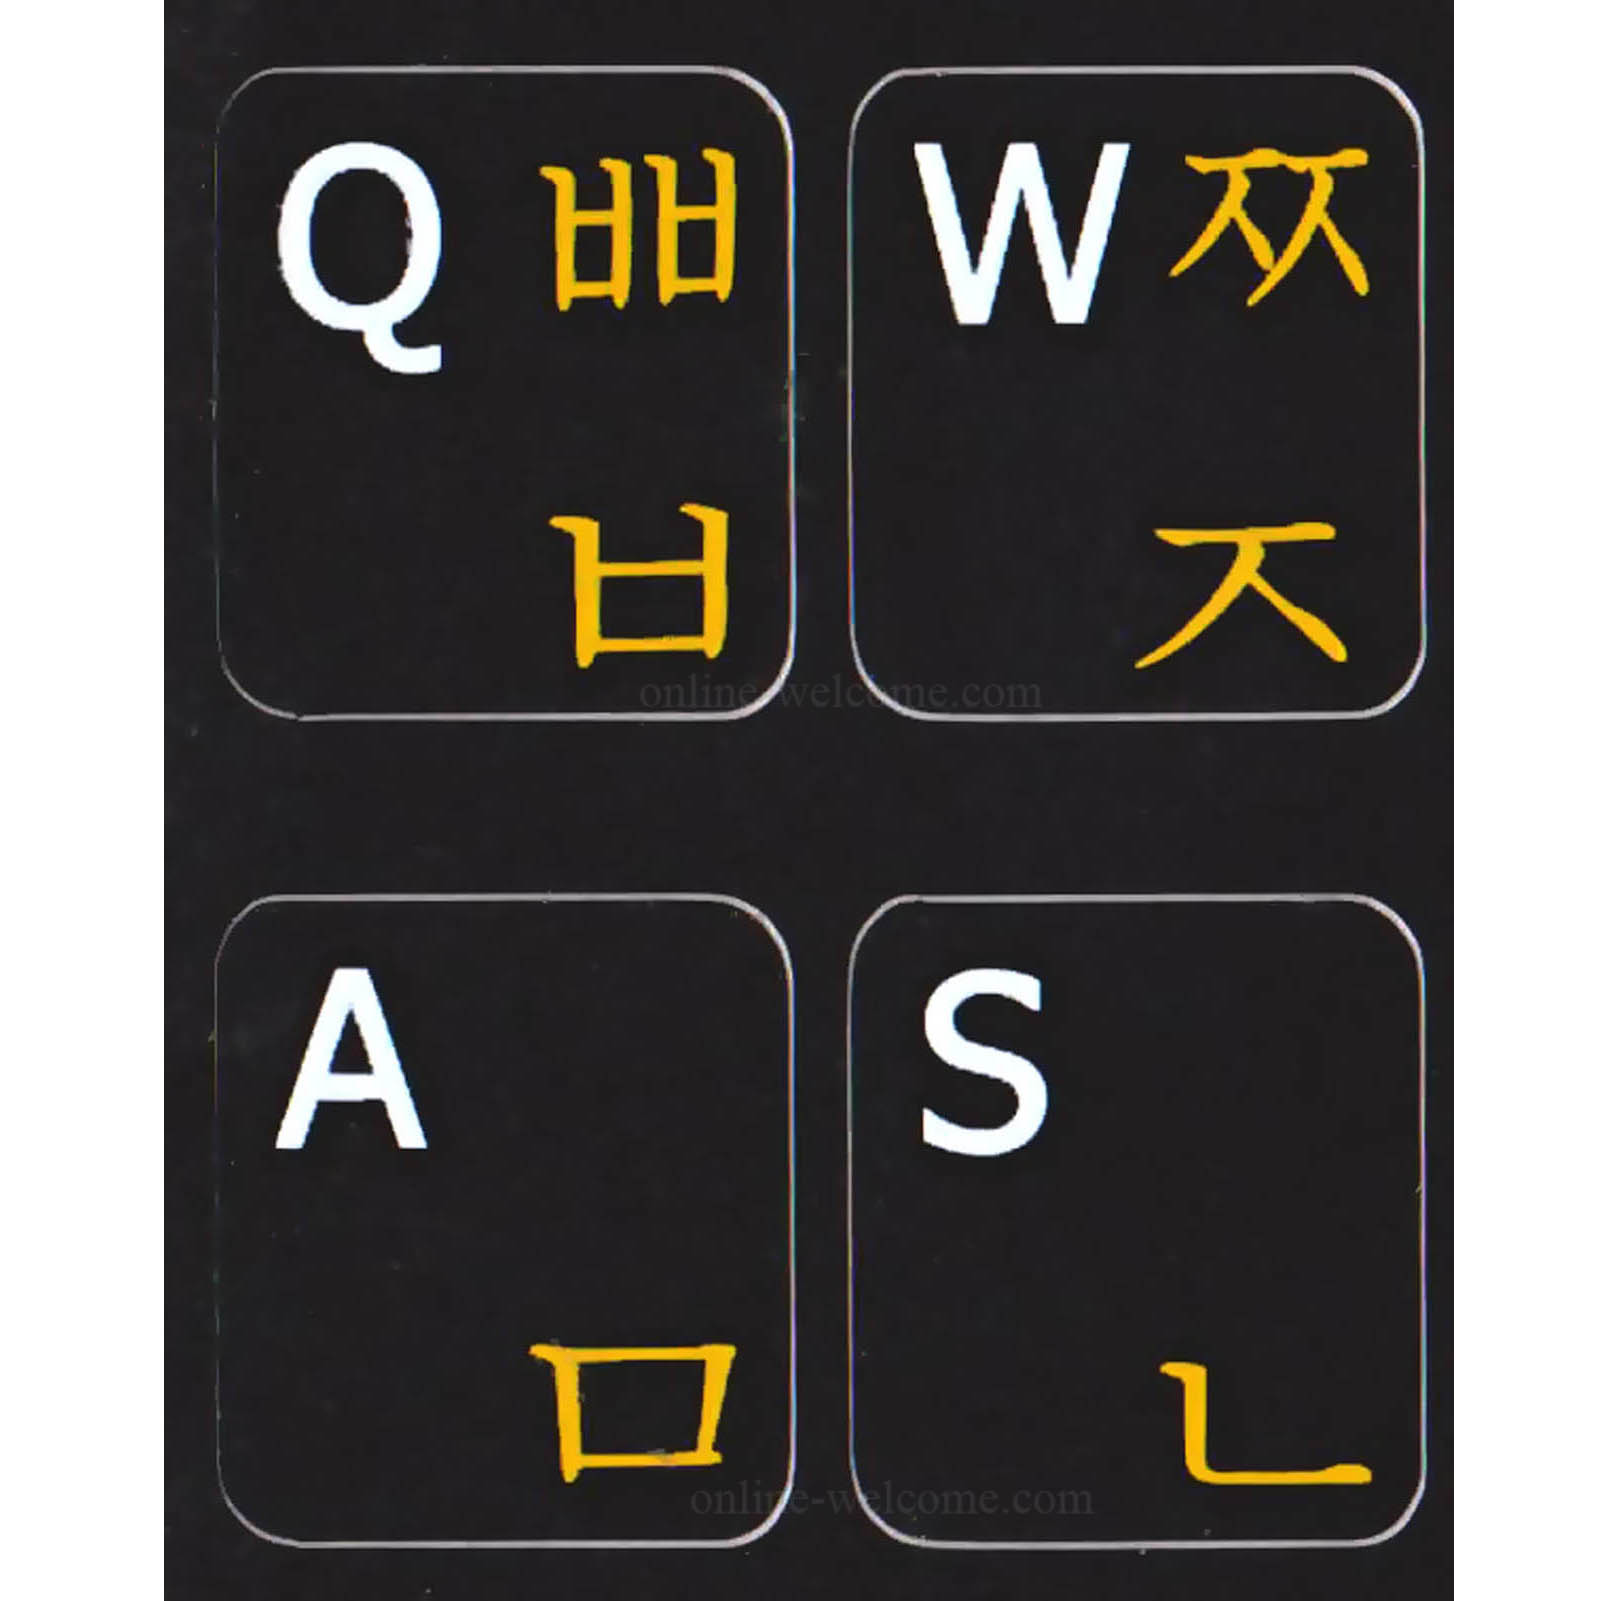 Korean-English keyboard letters black background non transparent labels stivkers